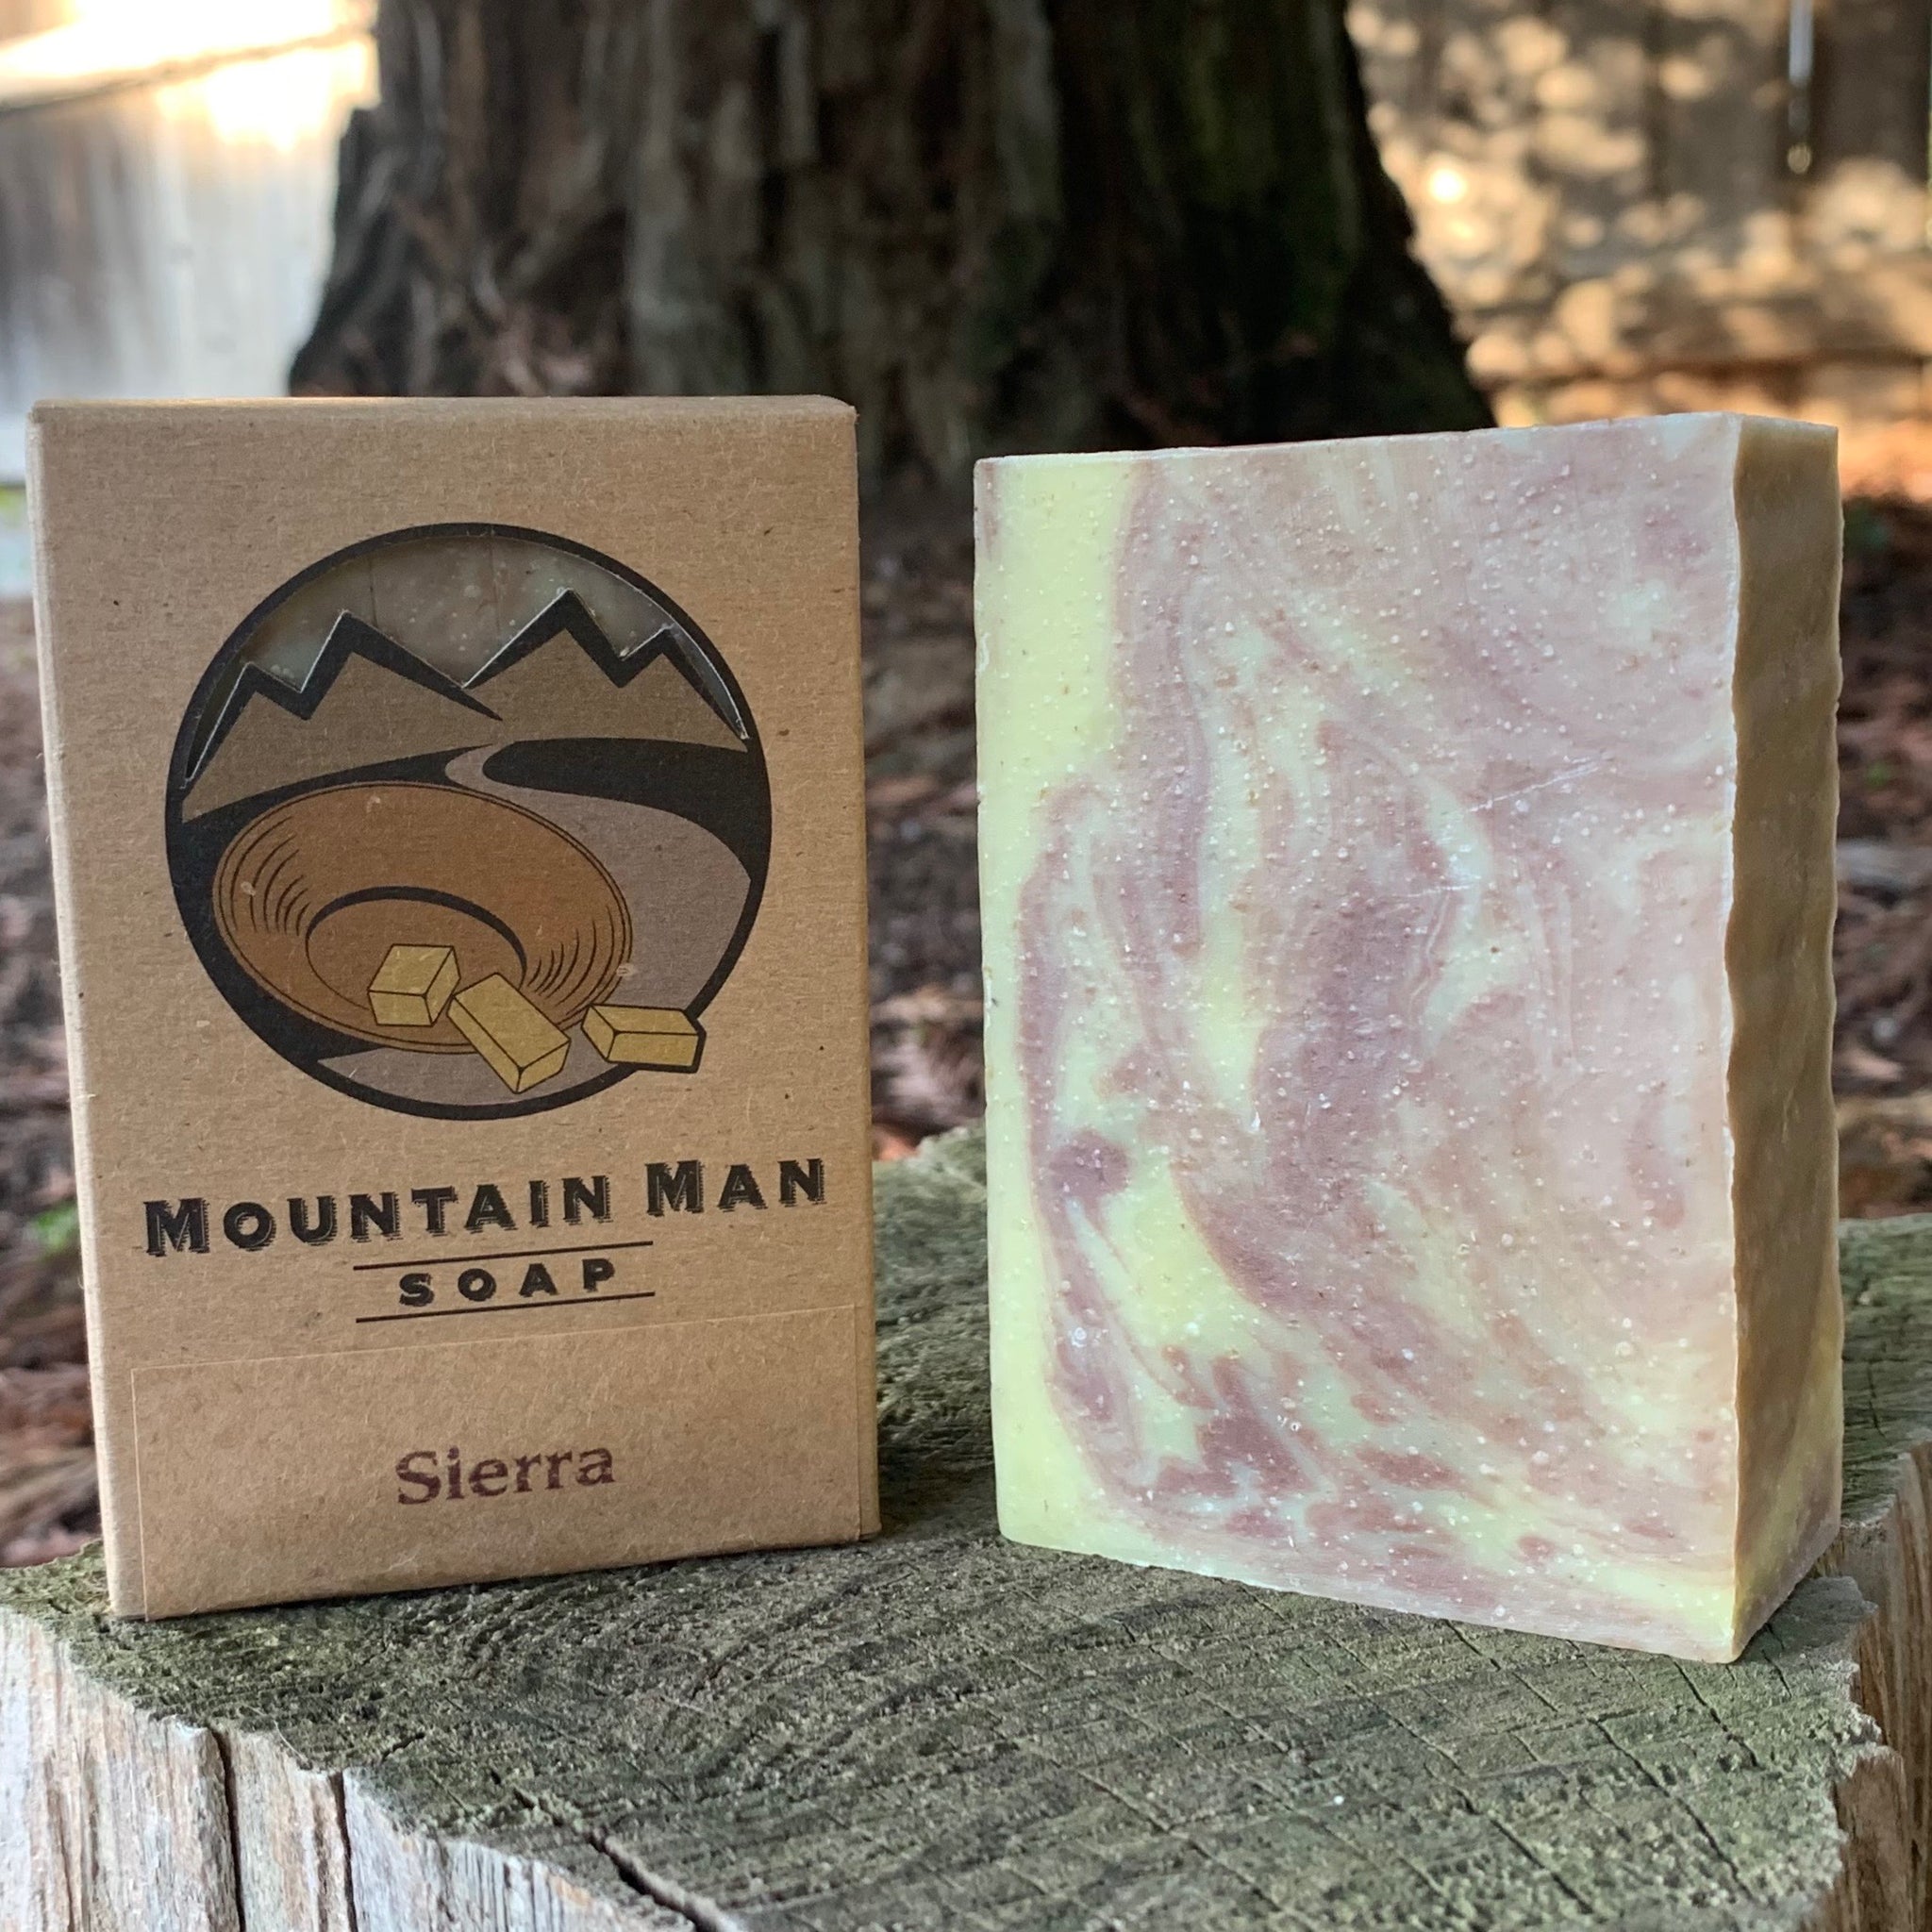 Mountain Man Bar Soap - Backwoods Beard